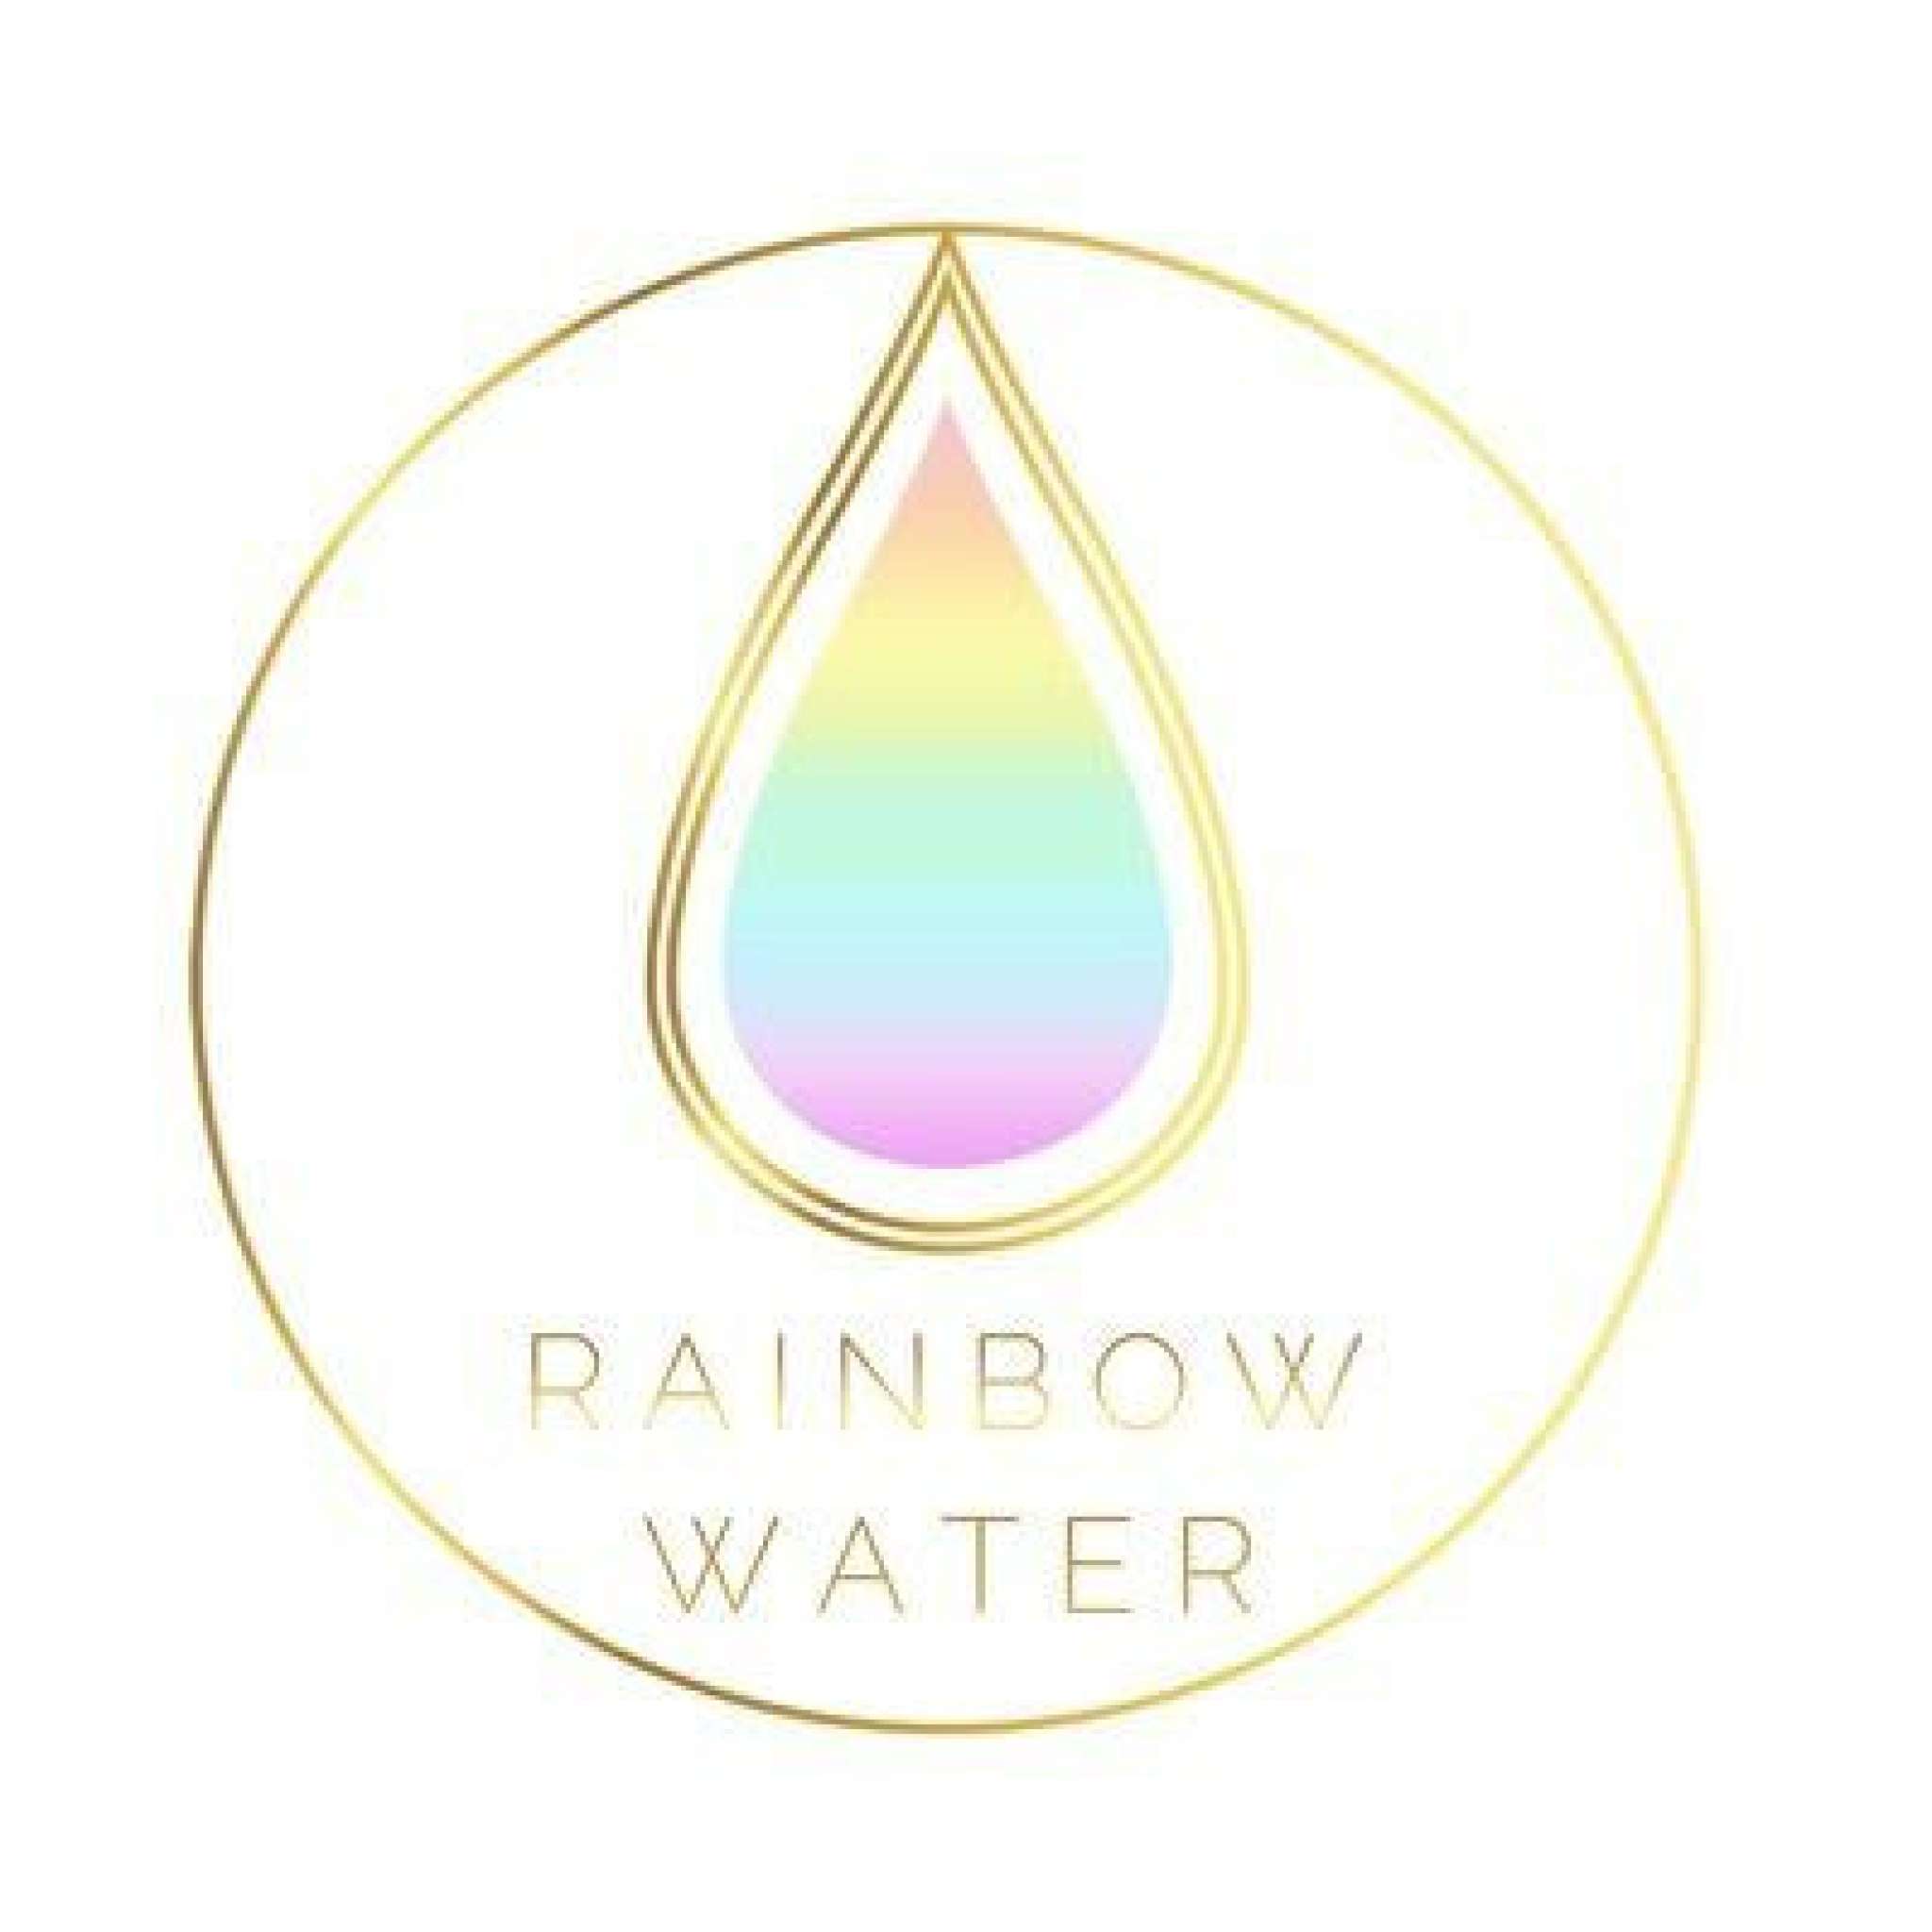 Rainbow water 3 1655721383.